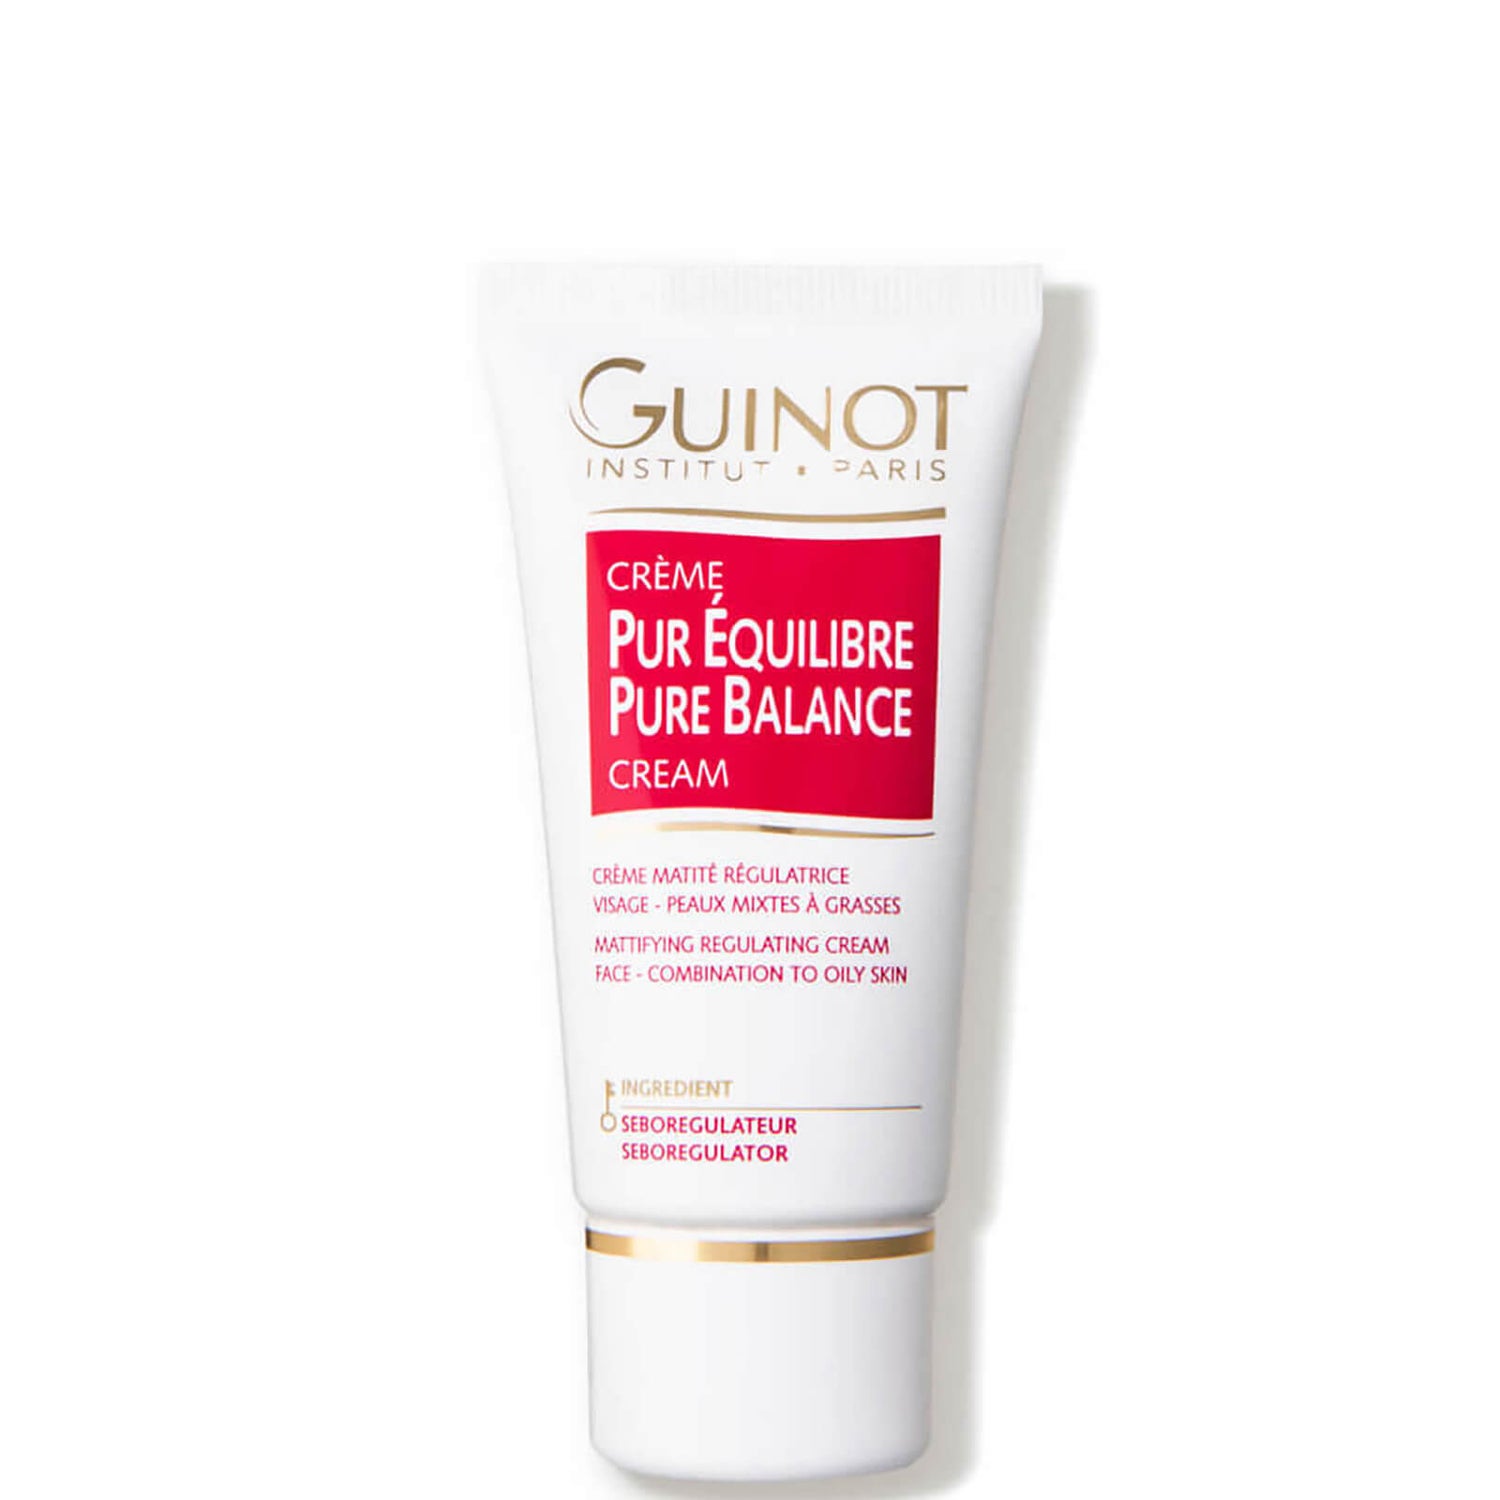 Guinot Creme Pur Equilibre (Pure Balance Cream) (50ml)